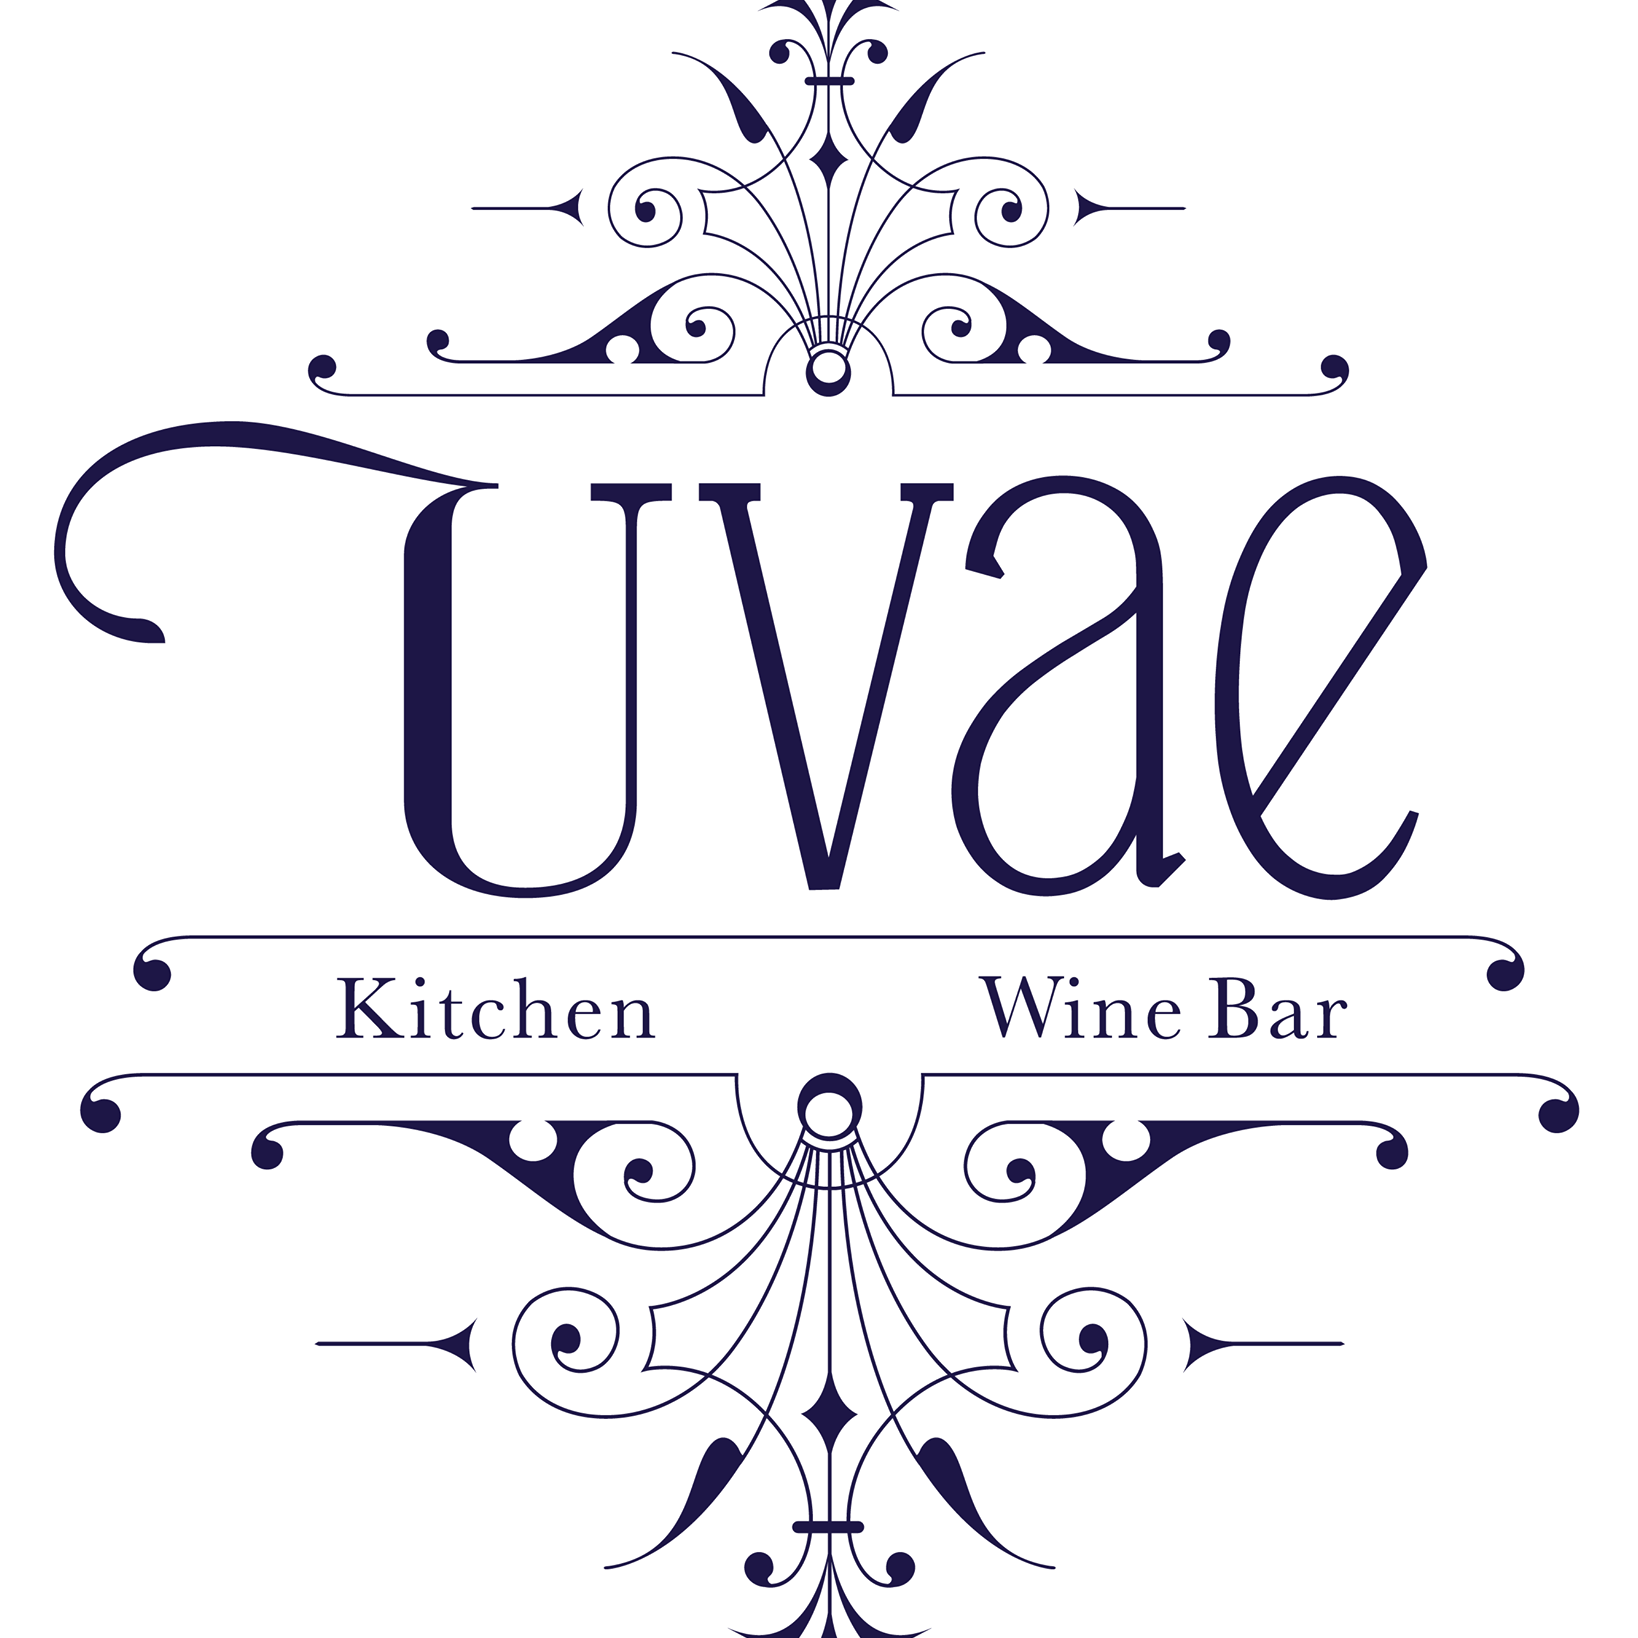 Uvae Kitchen & Wine Bar